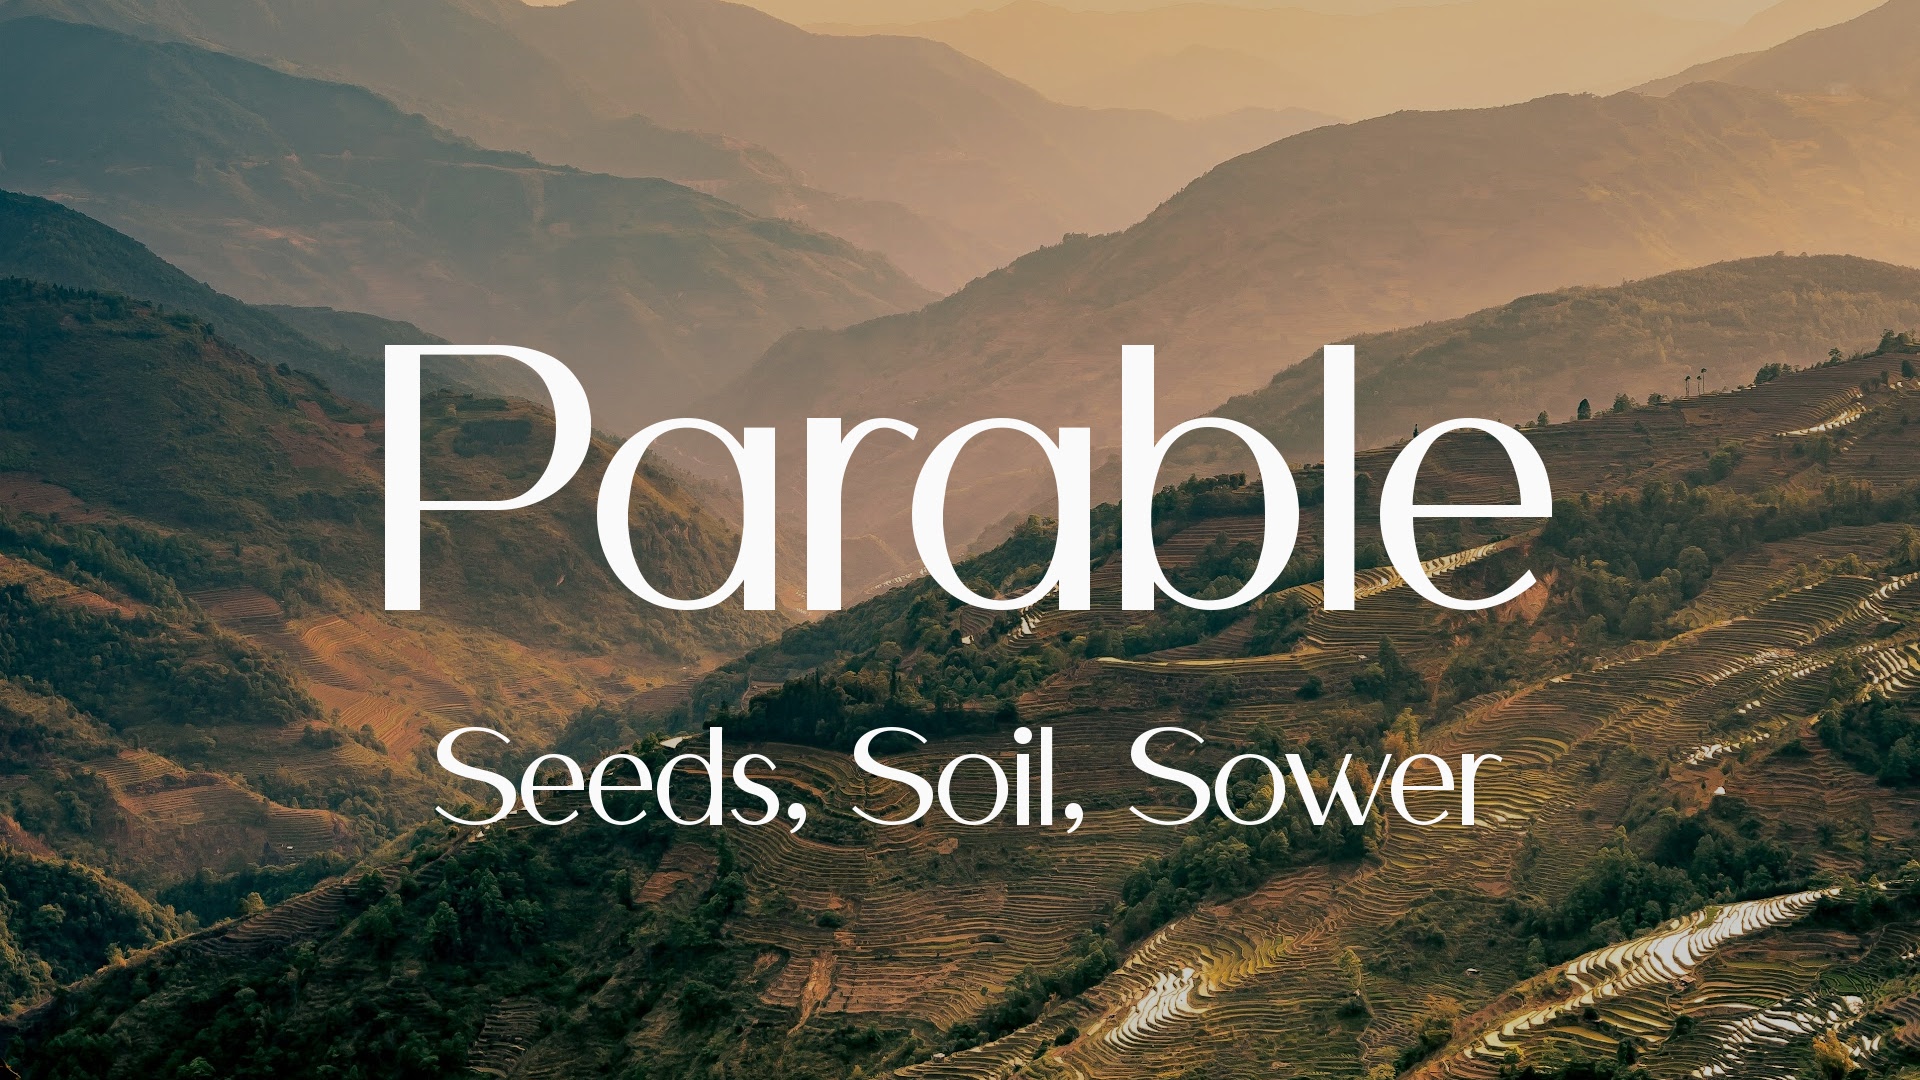 Exploring Jesus' teaching of parables.